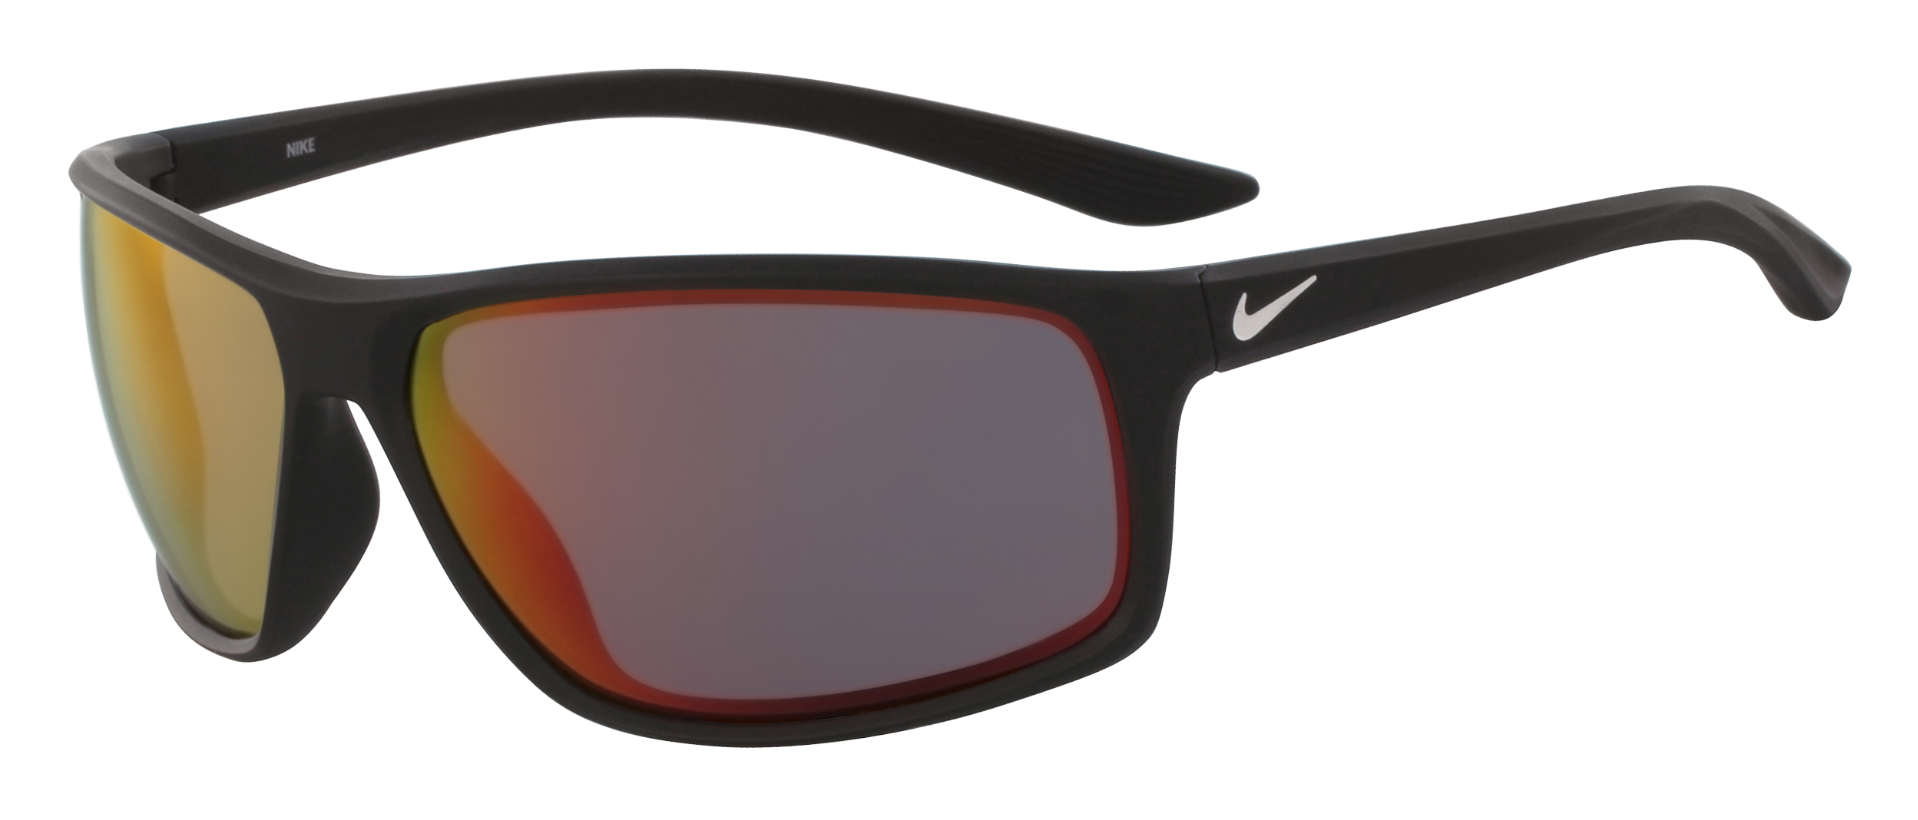 Nike Adrenaline 2 sunglasses in matte black with infrared lenses